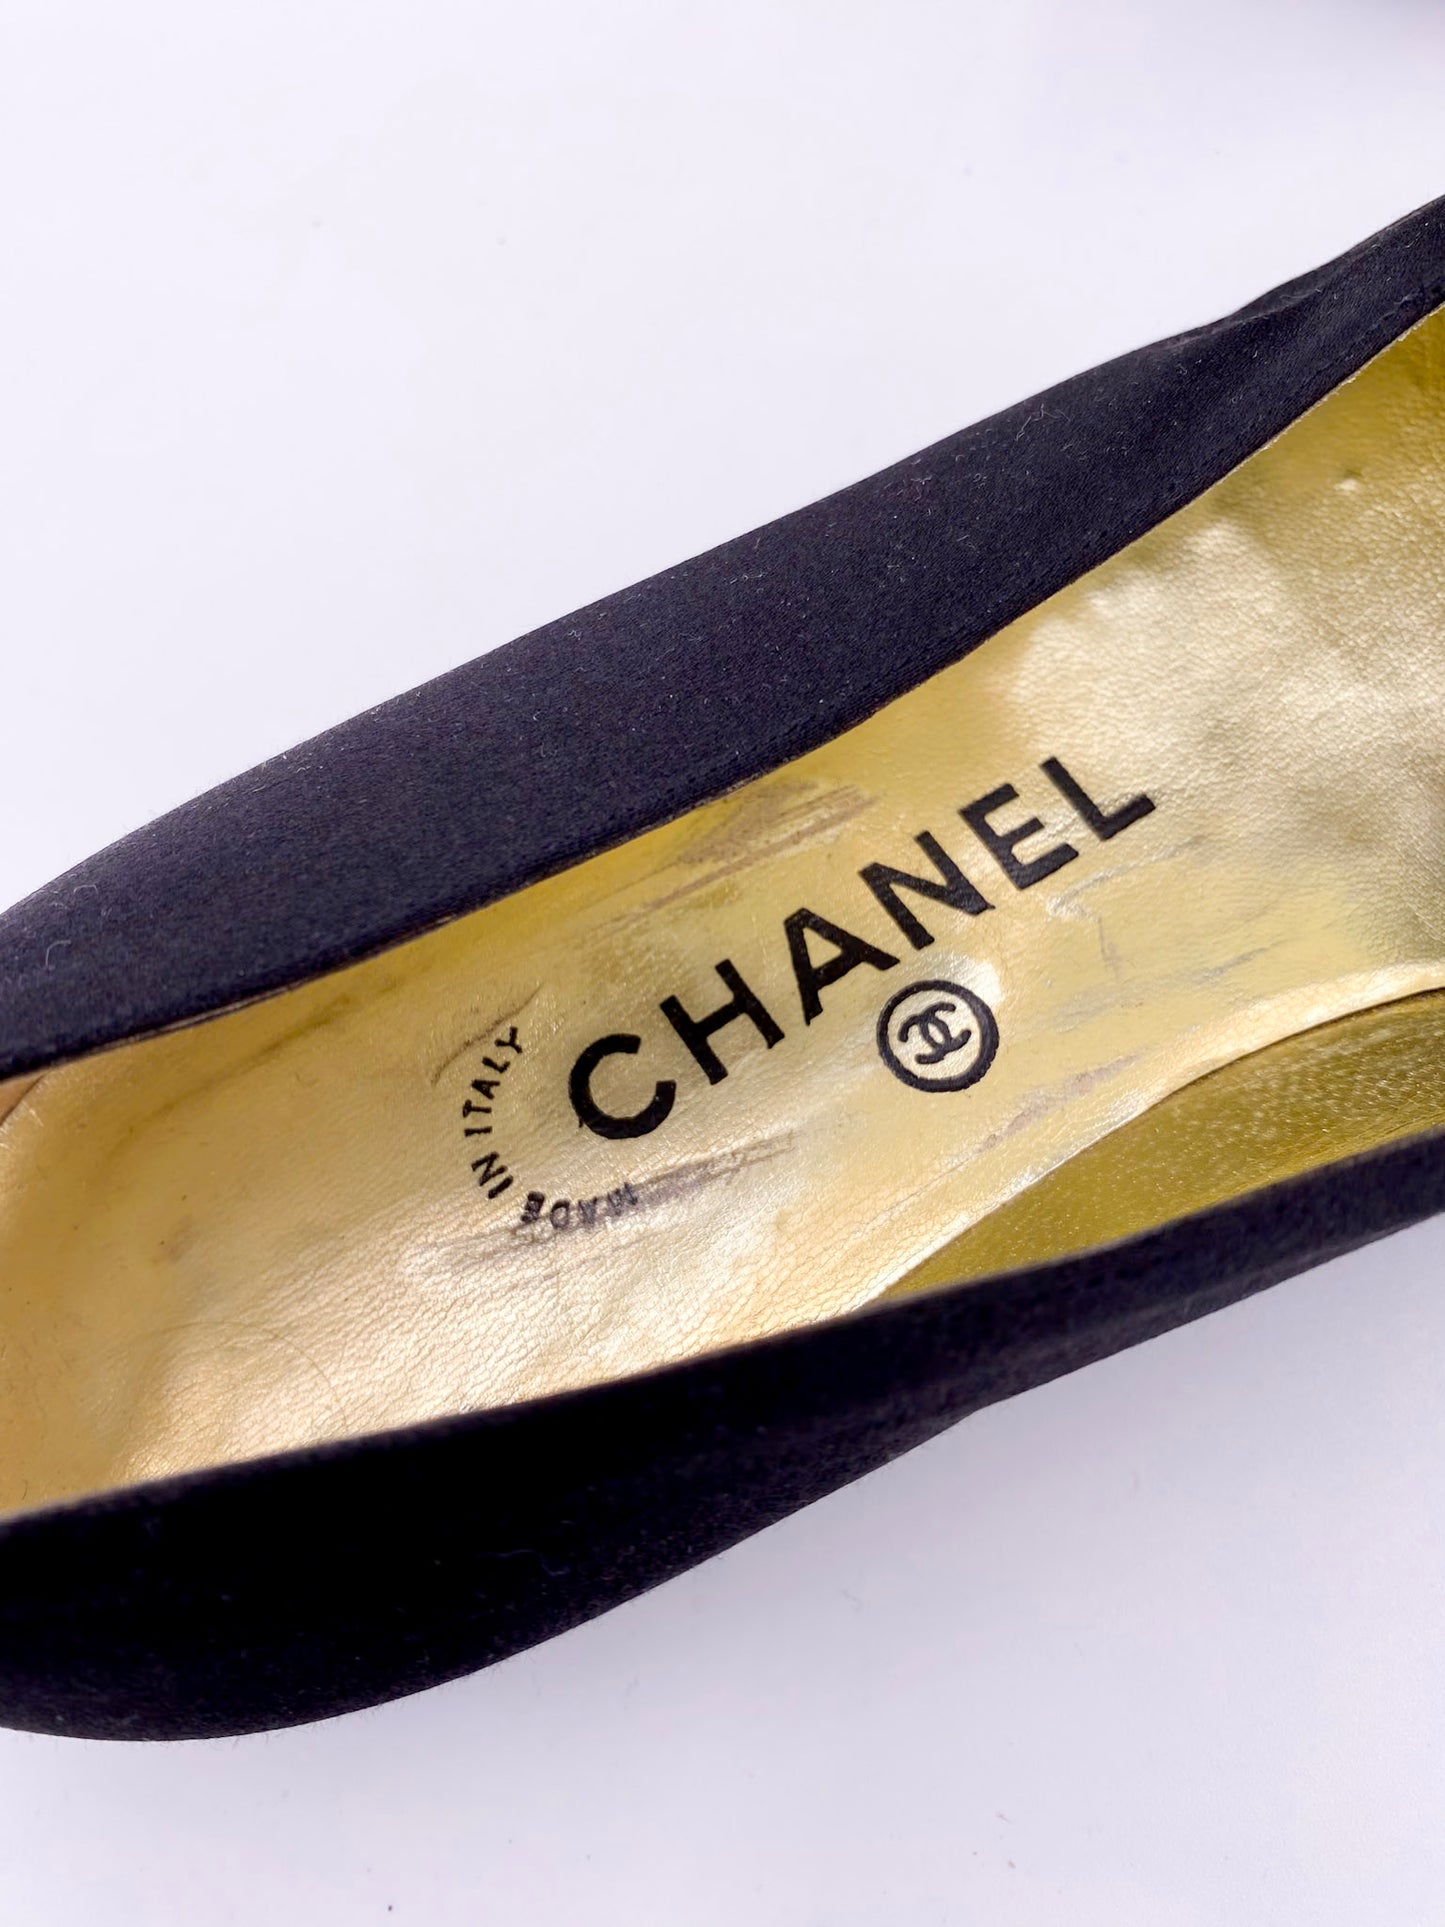 Chanel Black Bow Flats